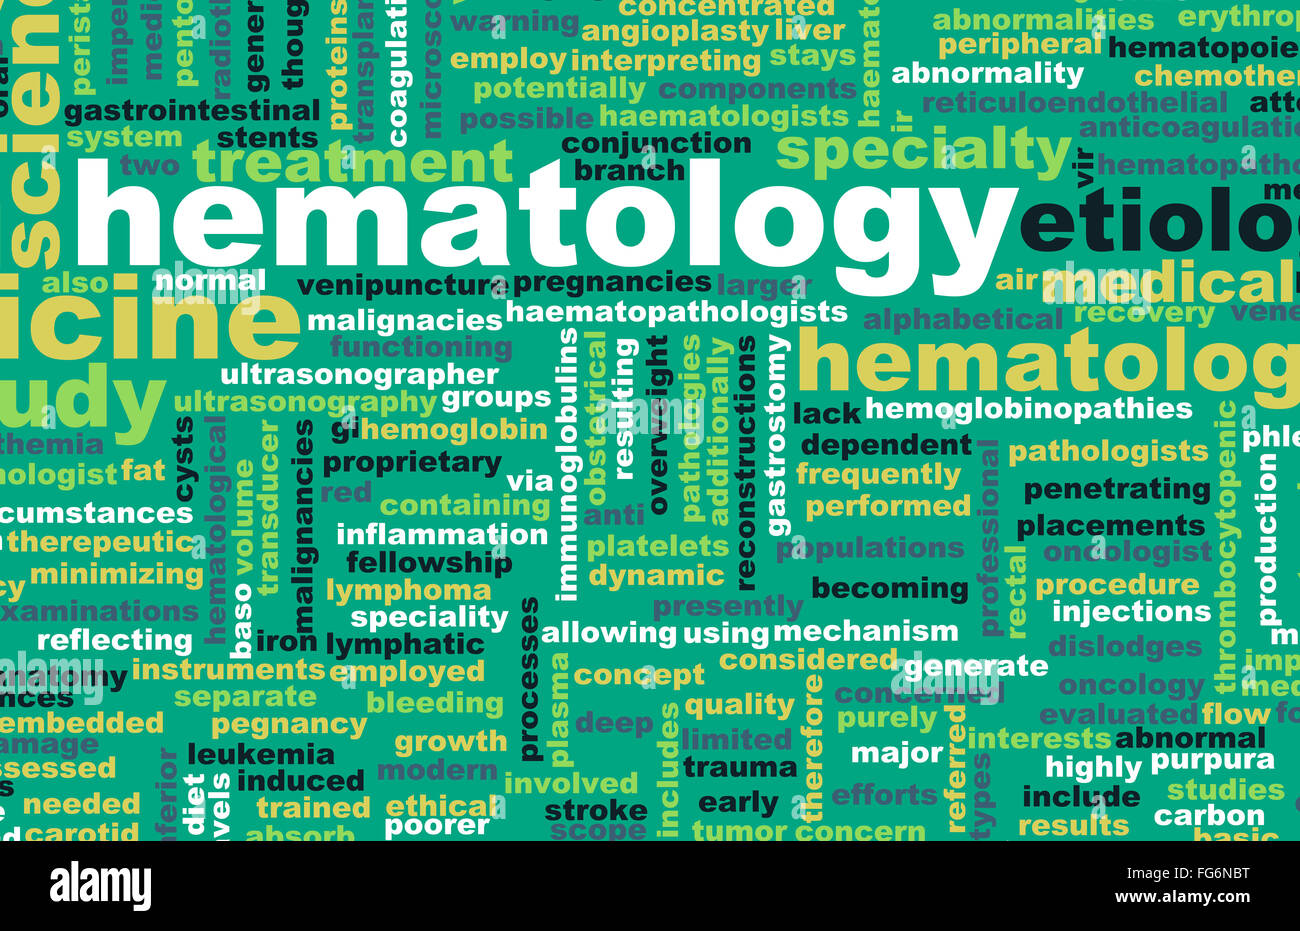 Hematology or Hematologist Medical Field Specialty As Art Stock Photo